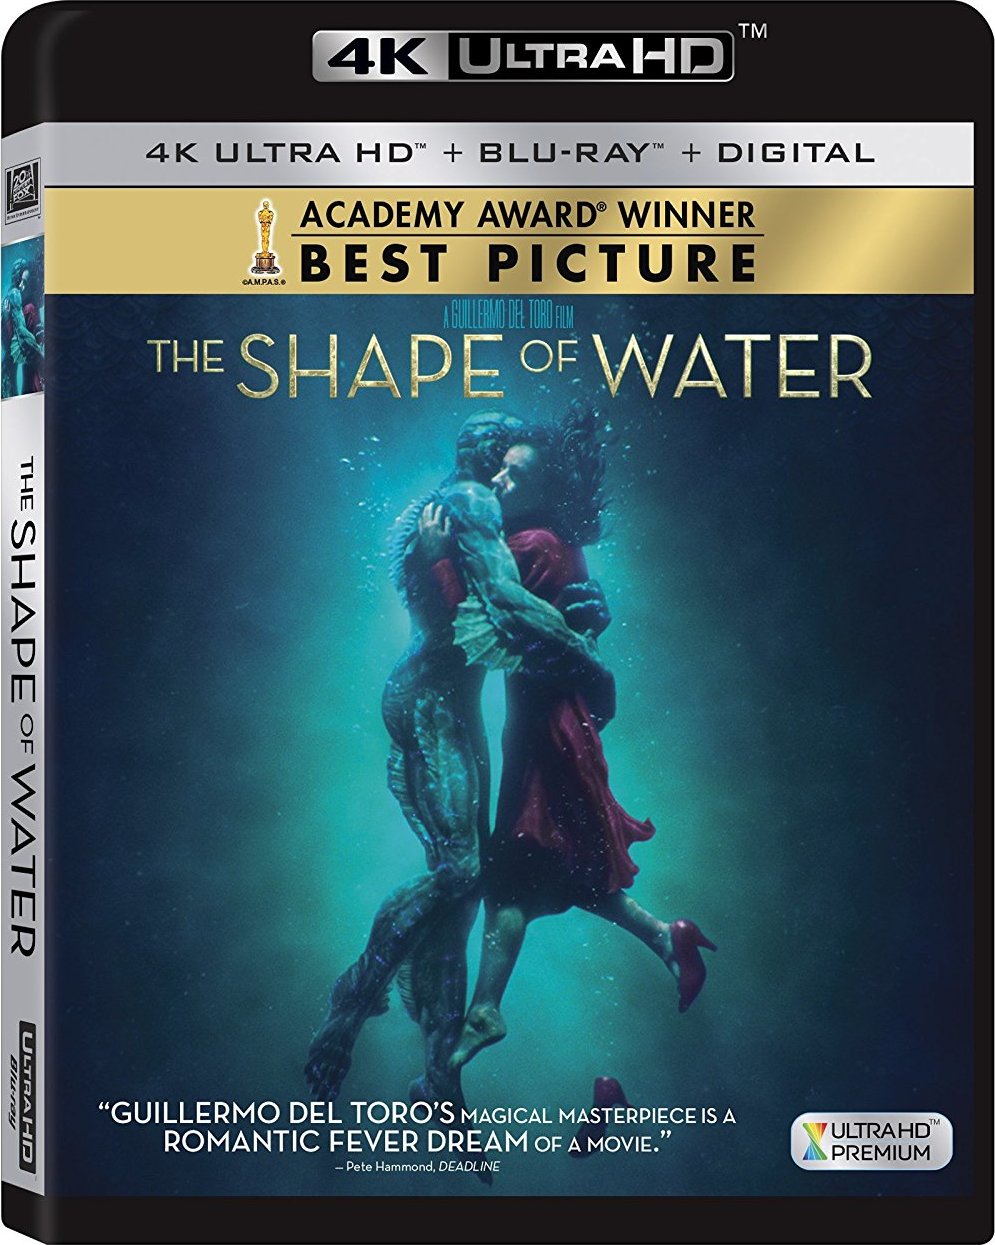 [水形物语].The.Shape.of.Water.2017.UHD.BluRay.2016p.HEVC.DTS-HD.MA.5.1-A236P5@OurBits    58.04G-1.jpg